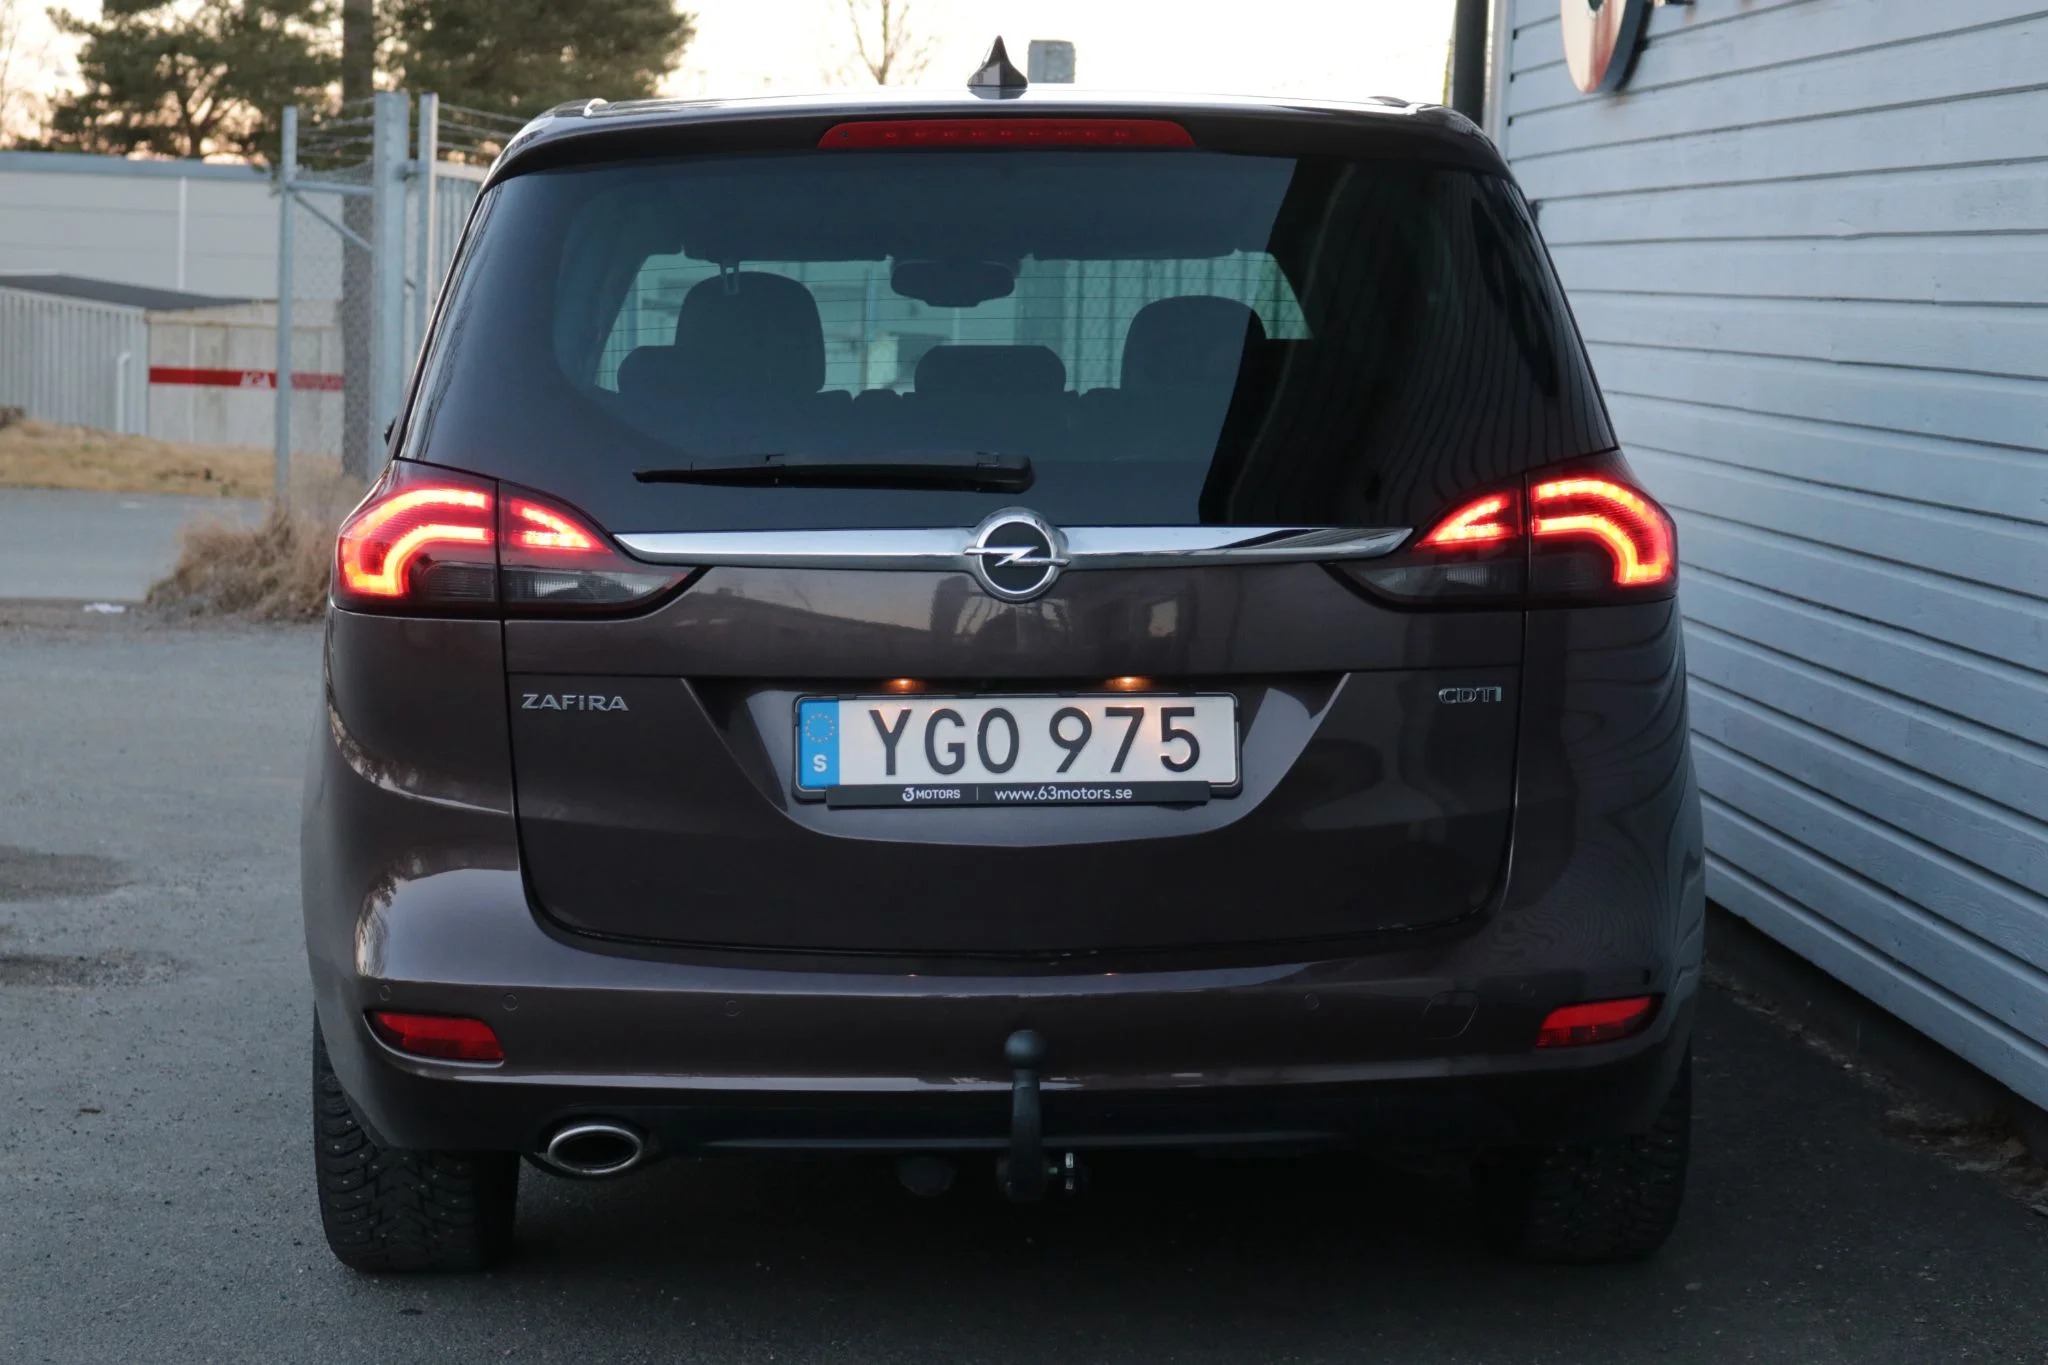 Opel Zafira Tourer 2.0 CDTI Automatisk, 170hk, 2017